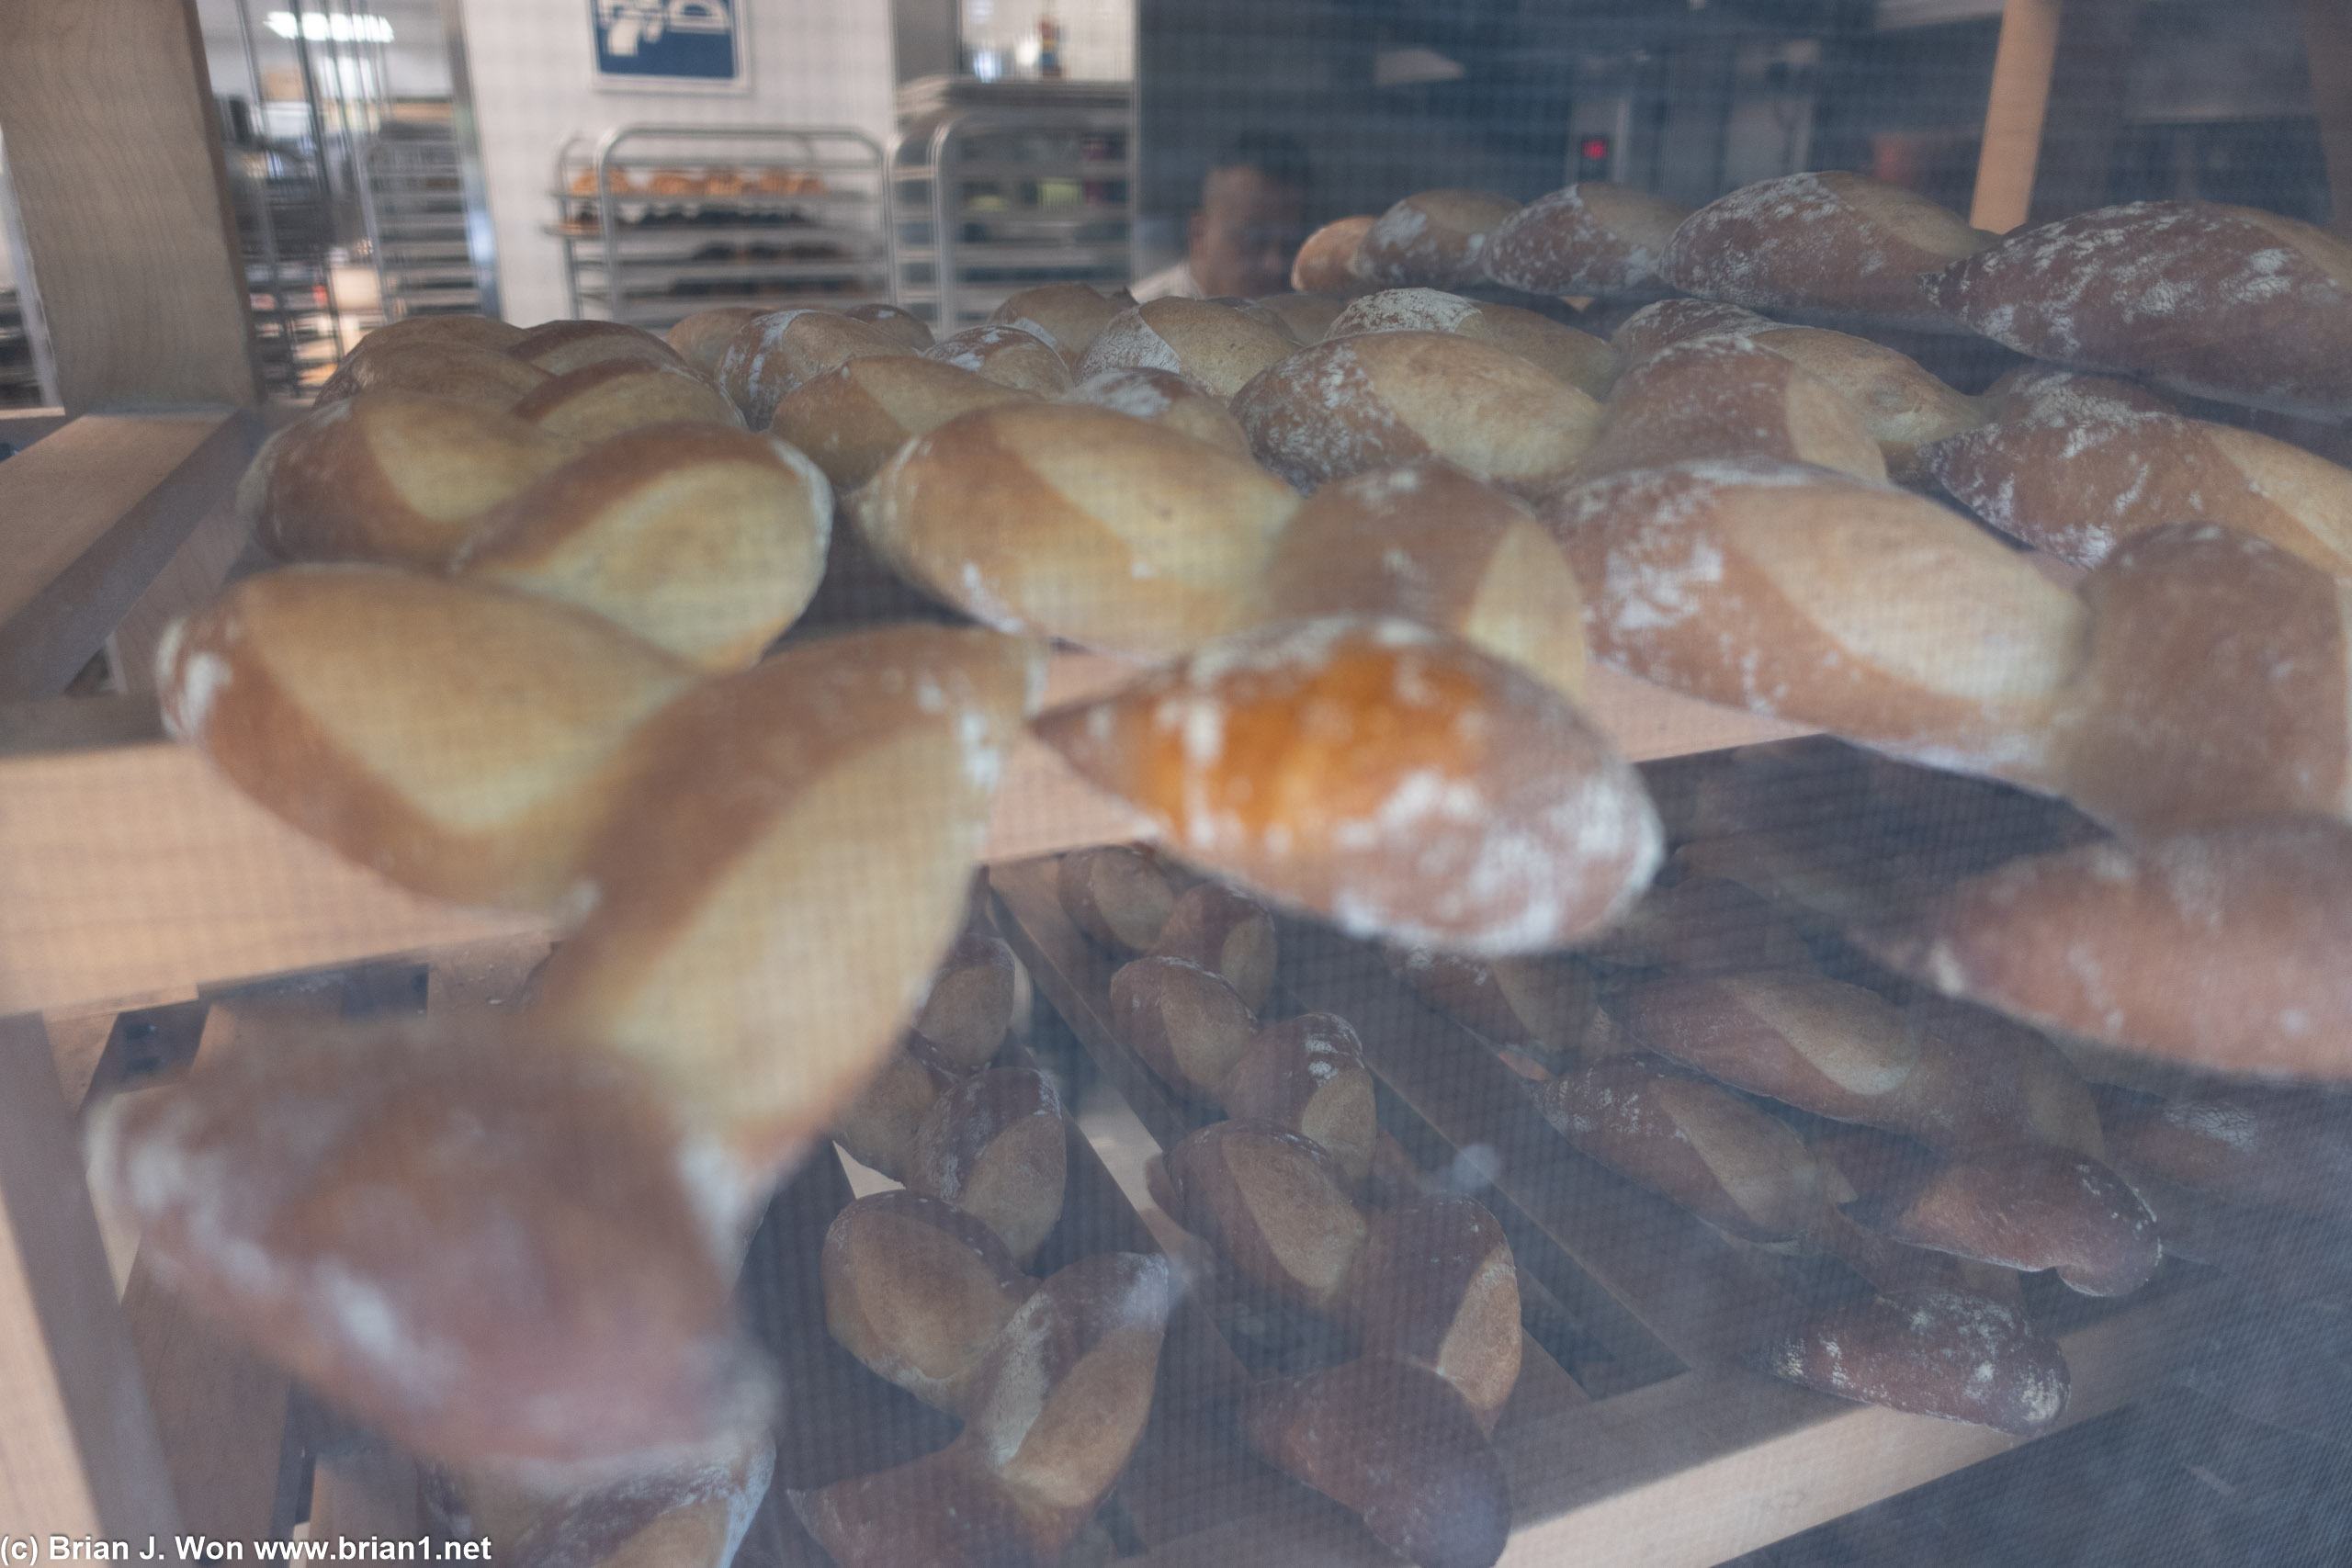 Bread. So much bread.